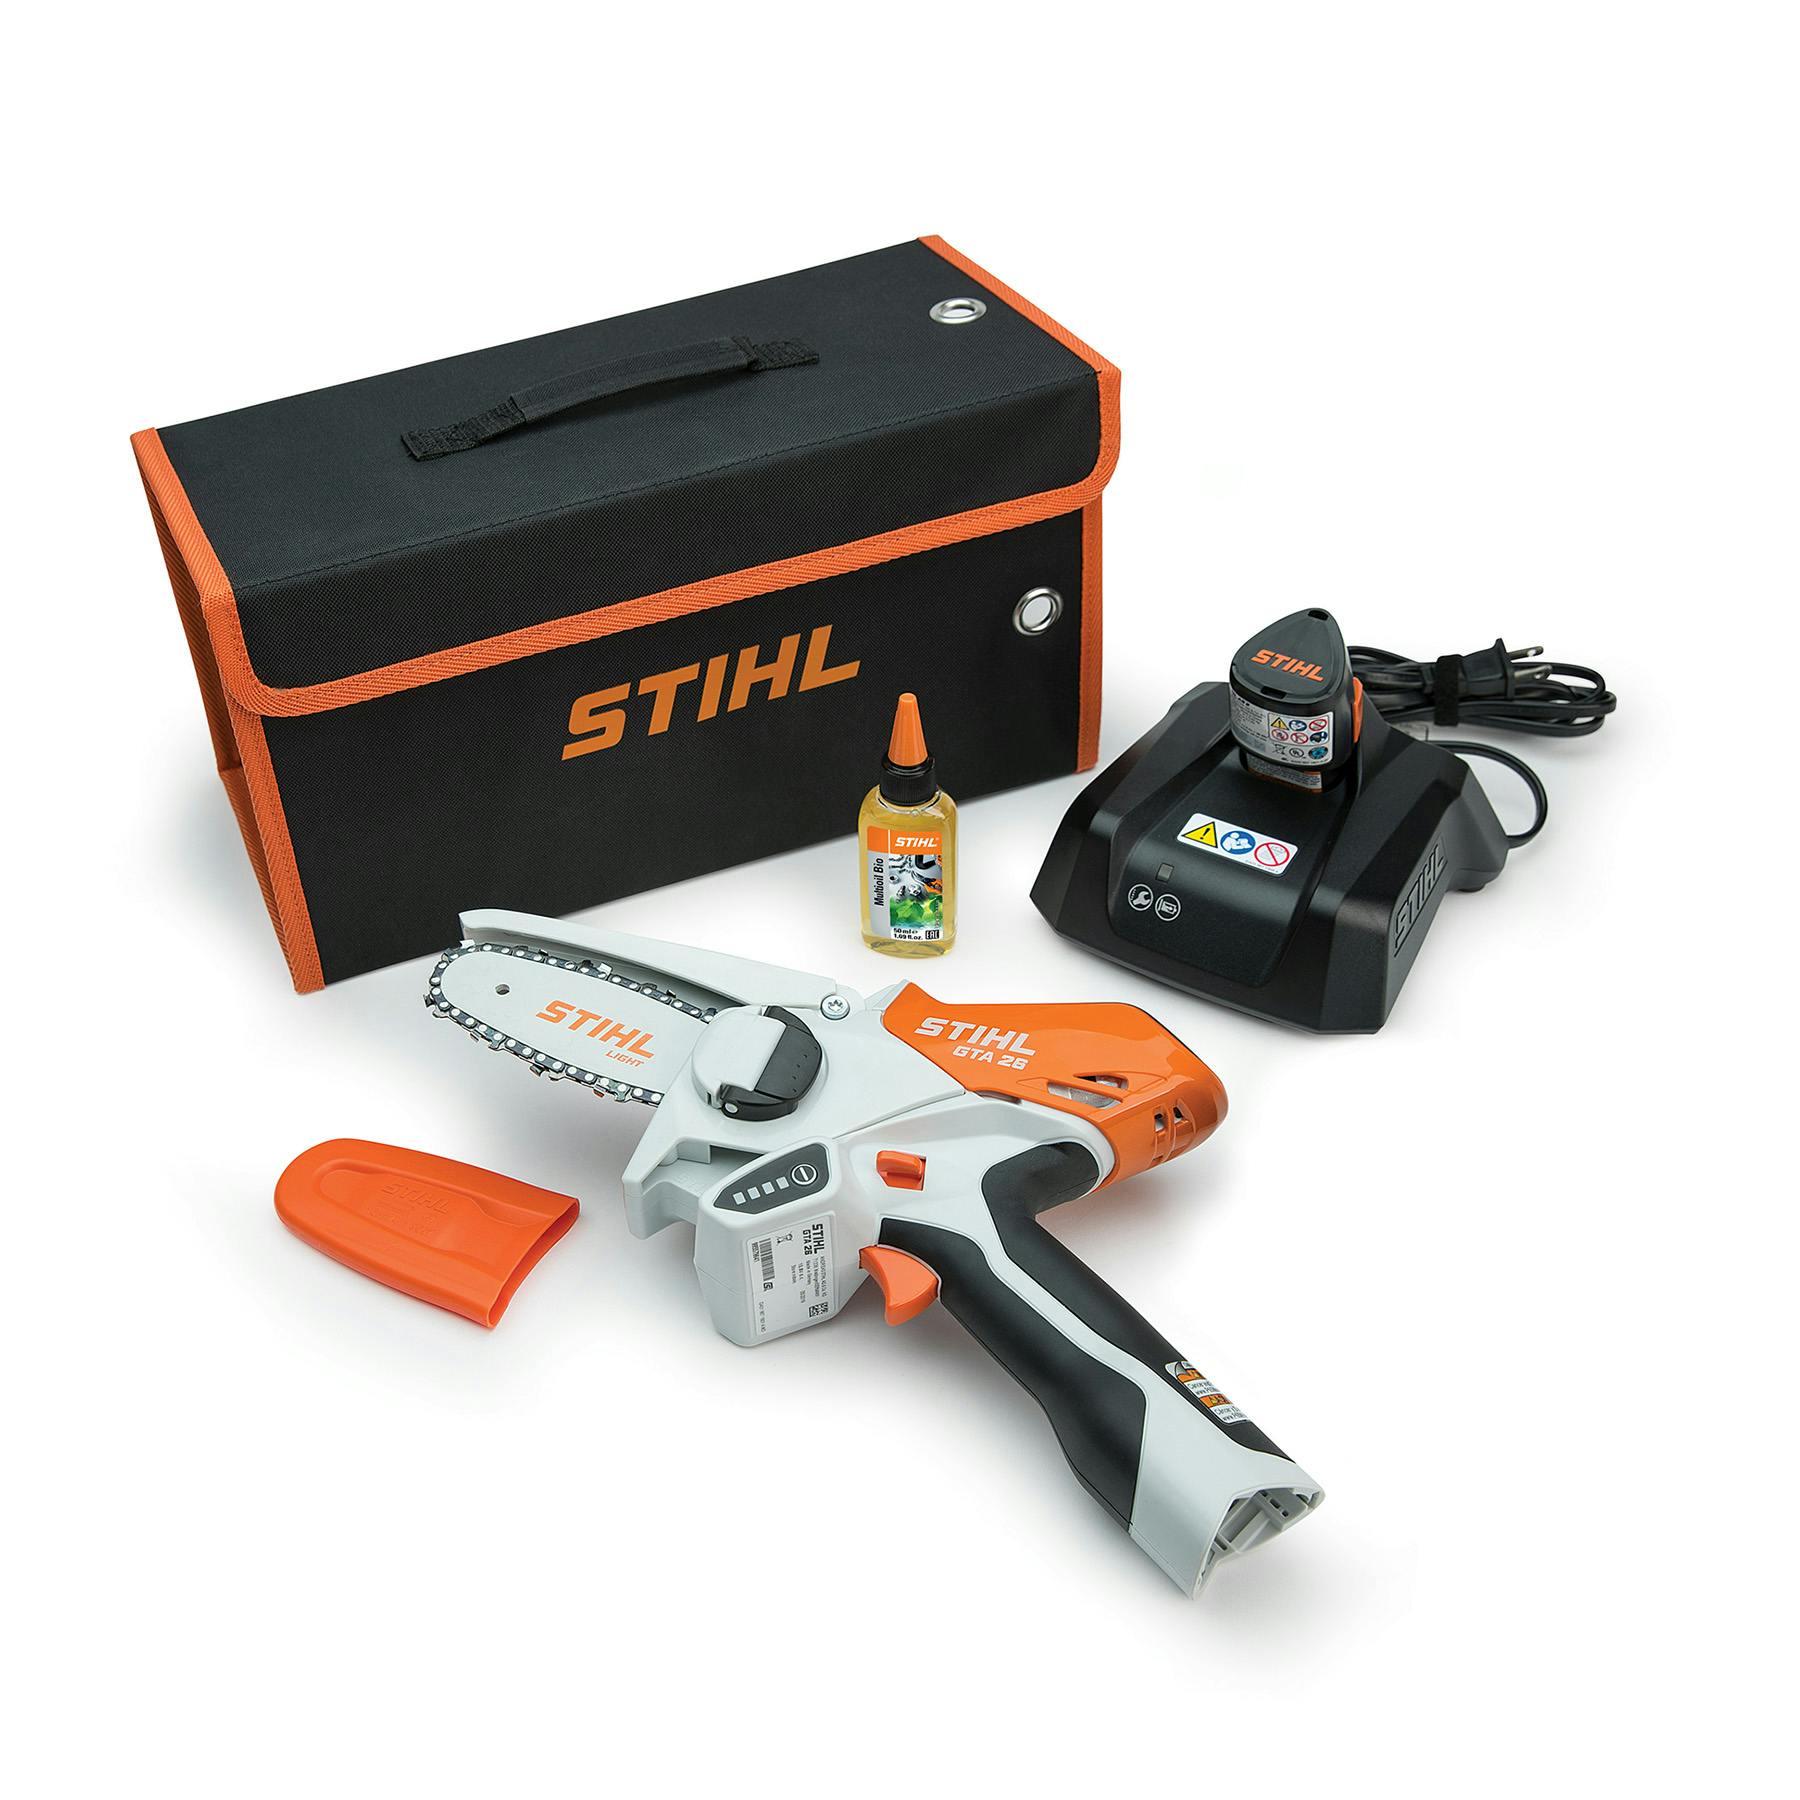 STIHL GTA 26 Handheld Cordless Pruner Chainsaw Battery Powered FAST SHIPPING! 